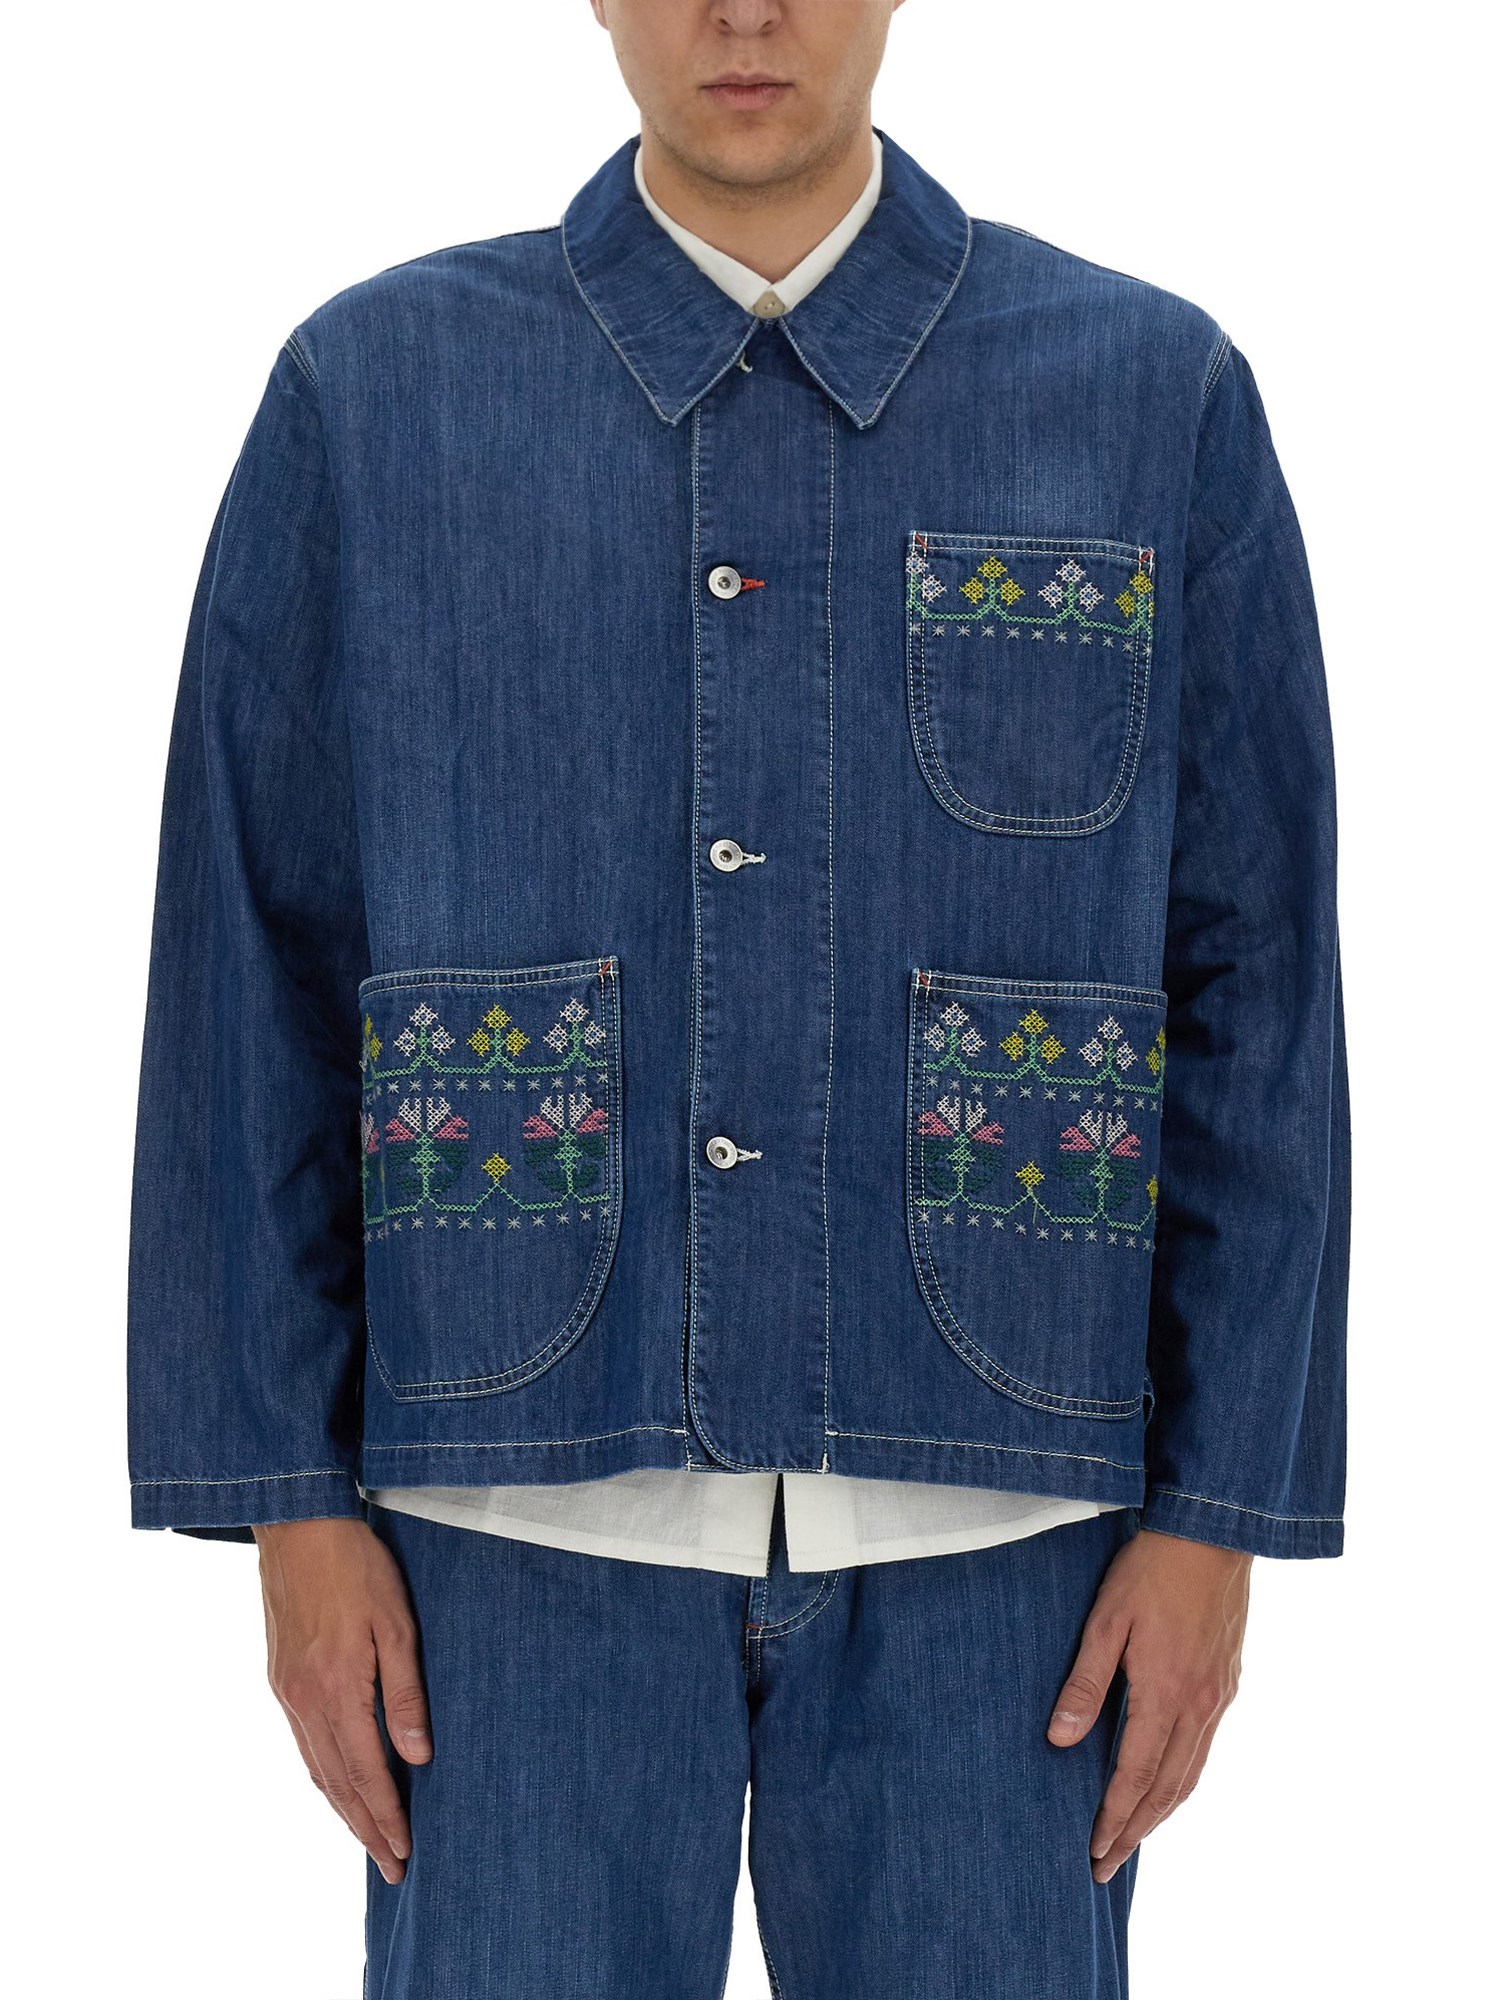 Ymc ymc jacket with embroidery